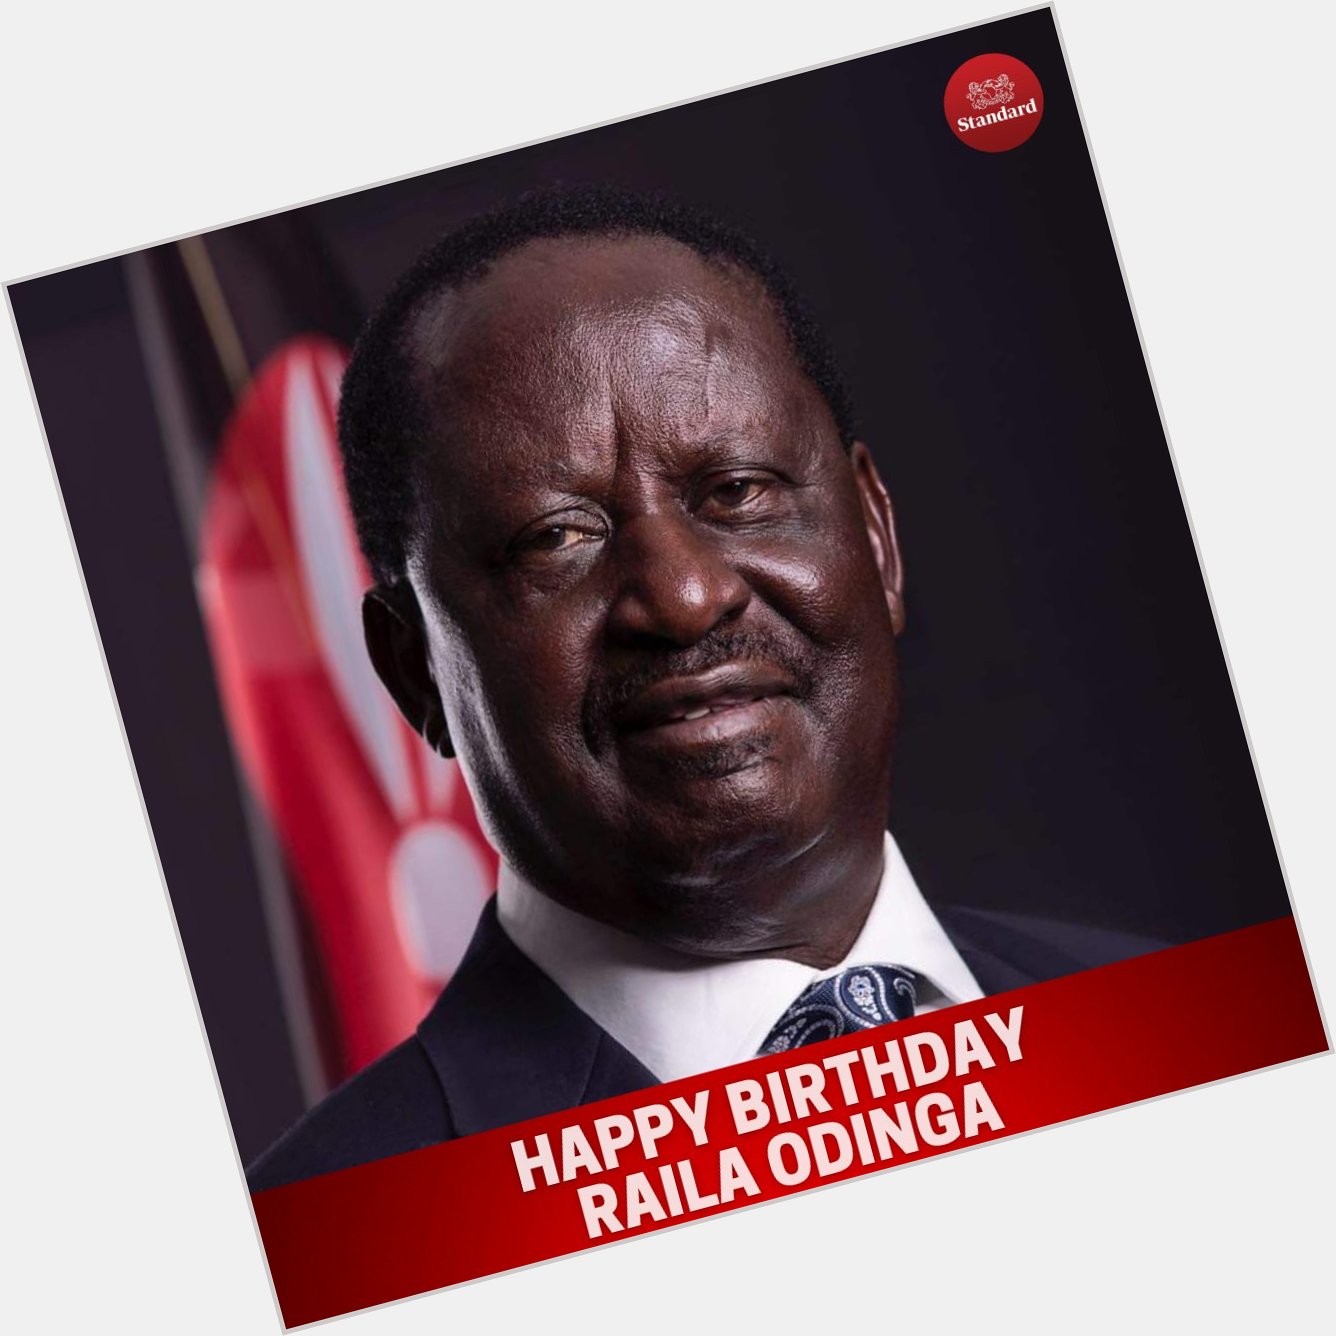 Happy Birthday Raila Odinga

Jakom turns 77. Send him your birthday message  